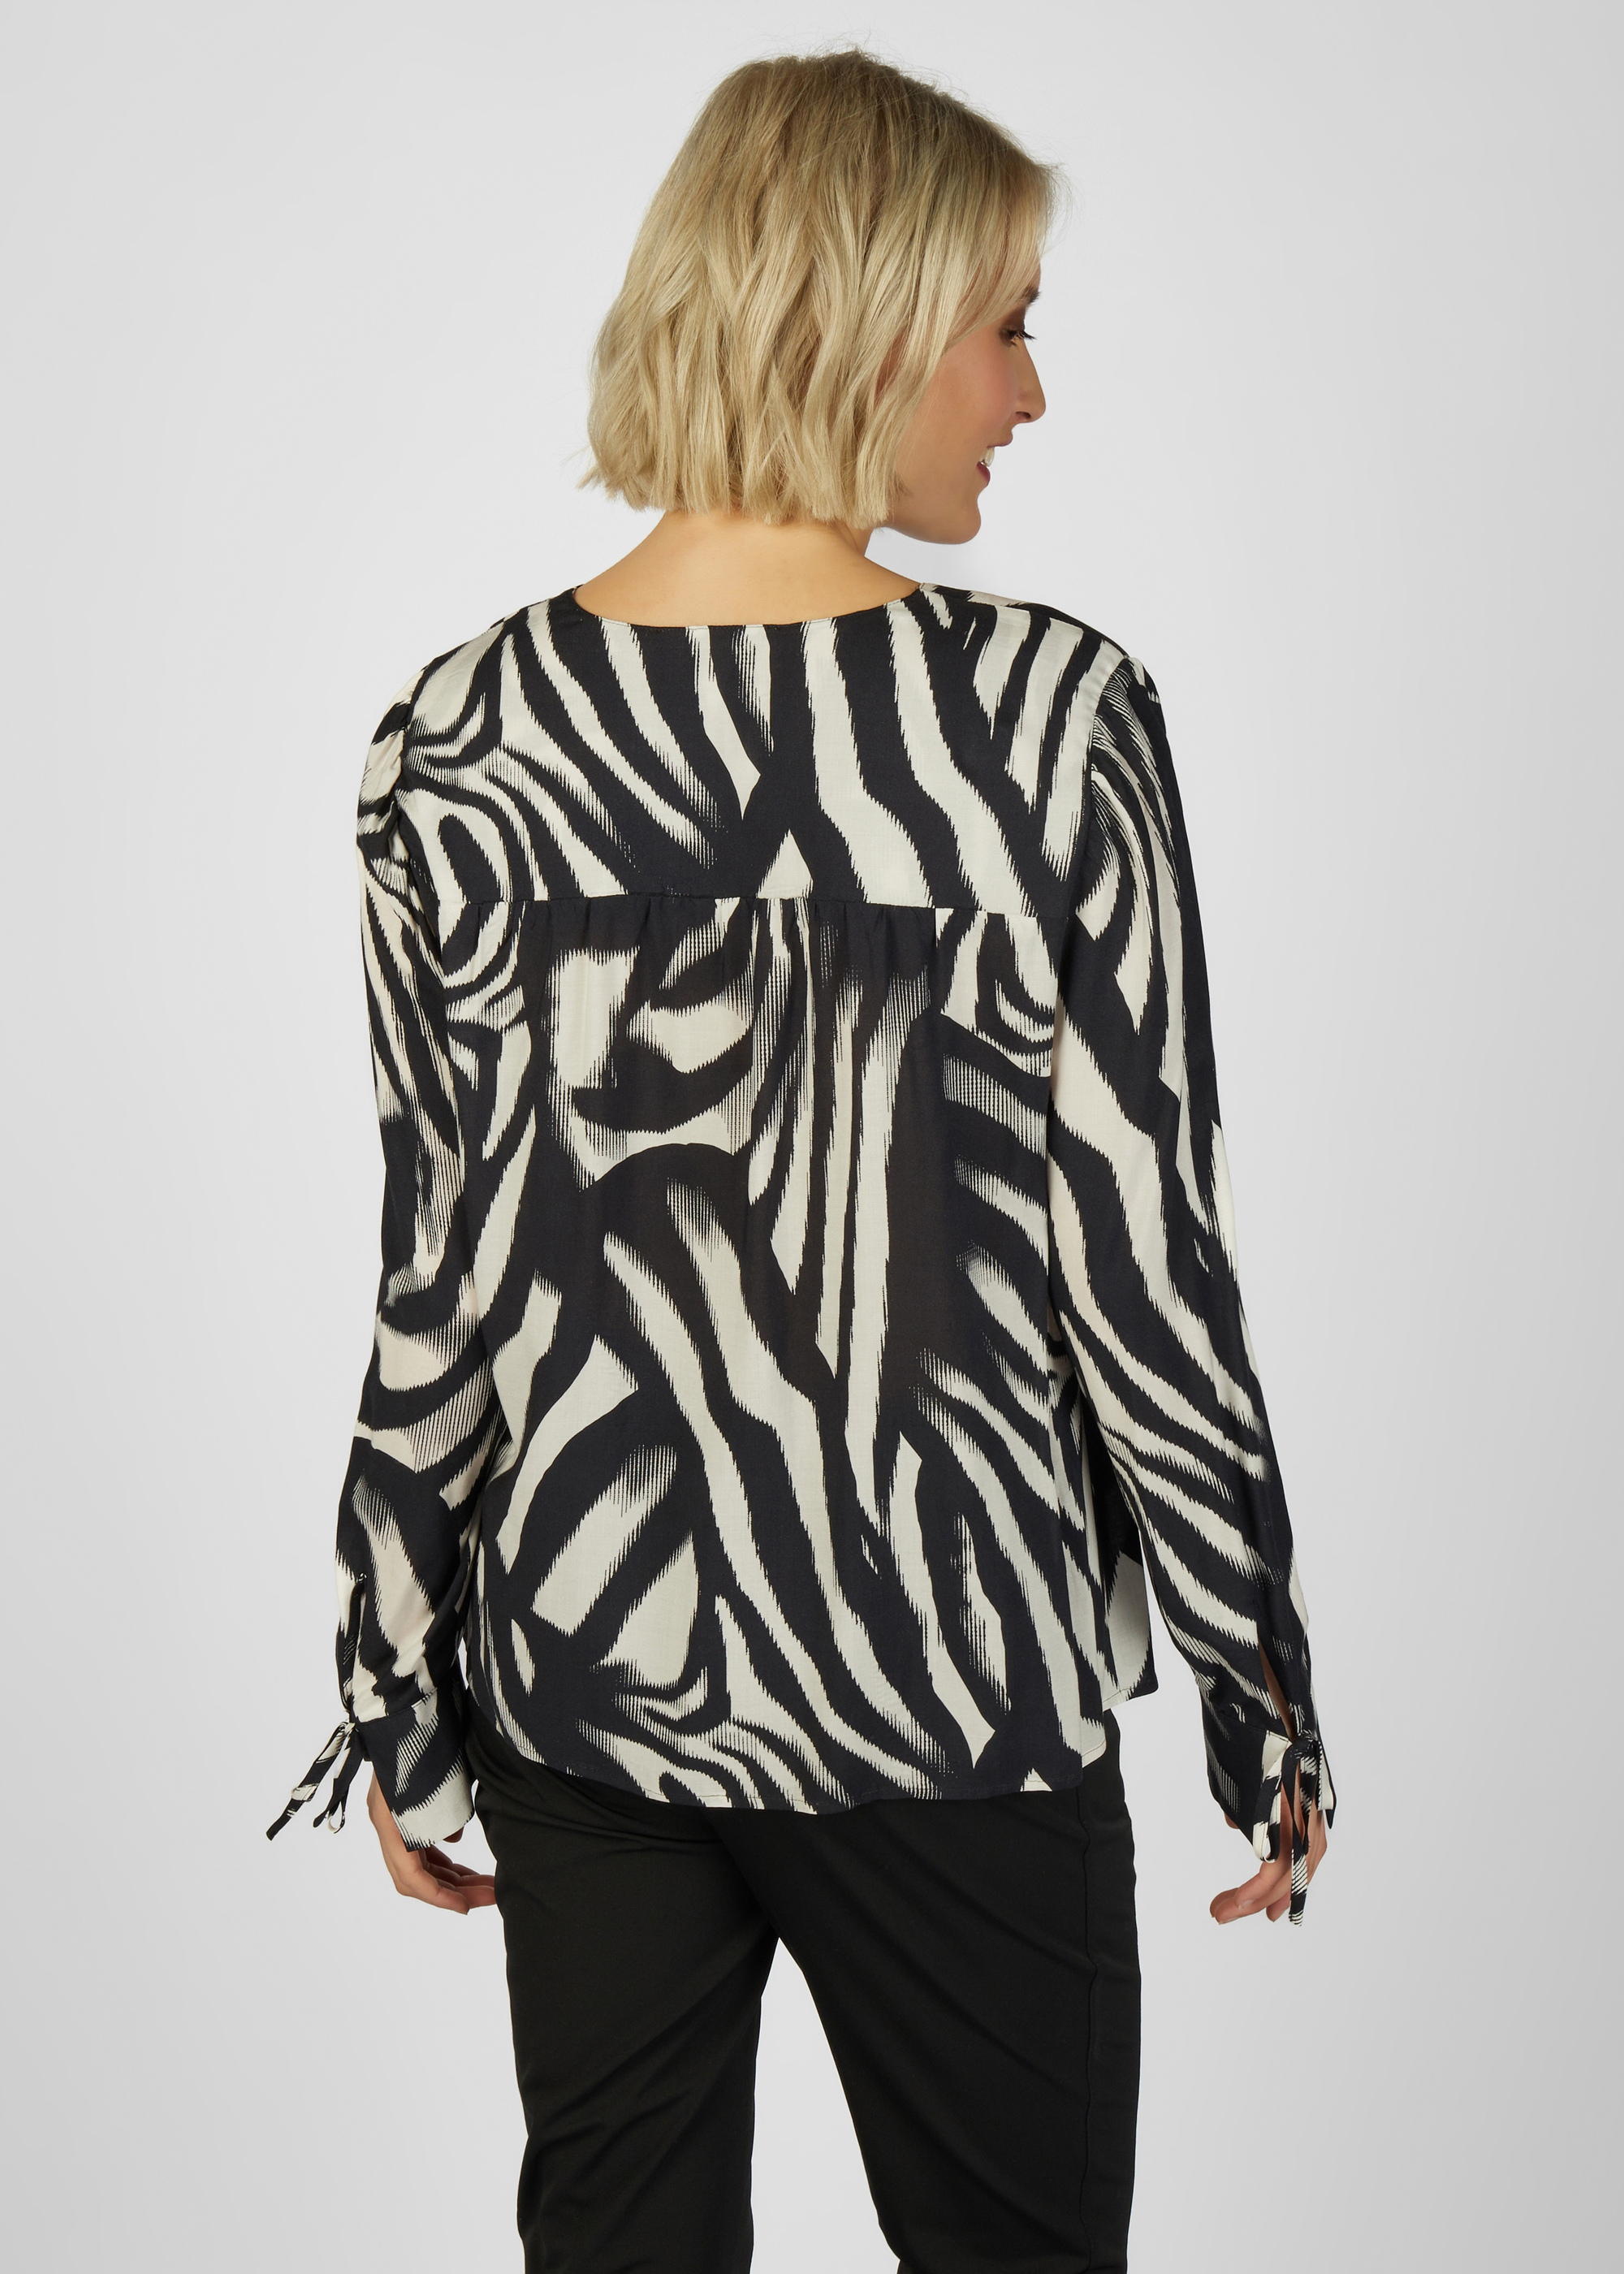 Bluse mit Zebra Muster